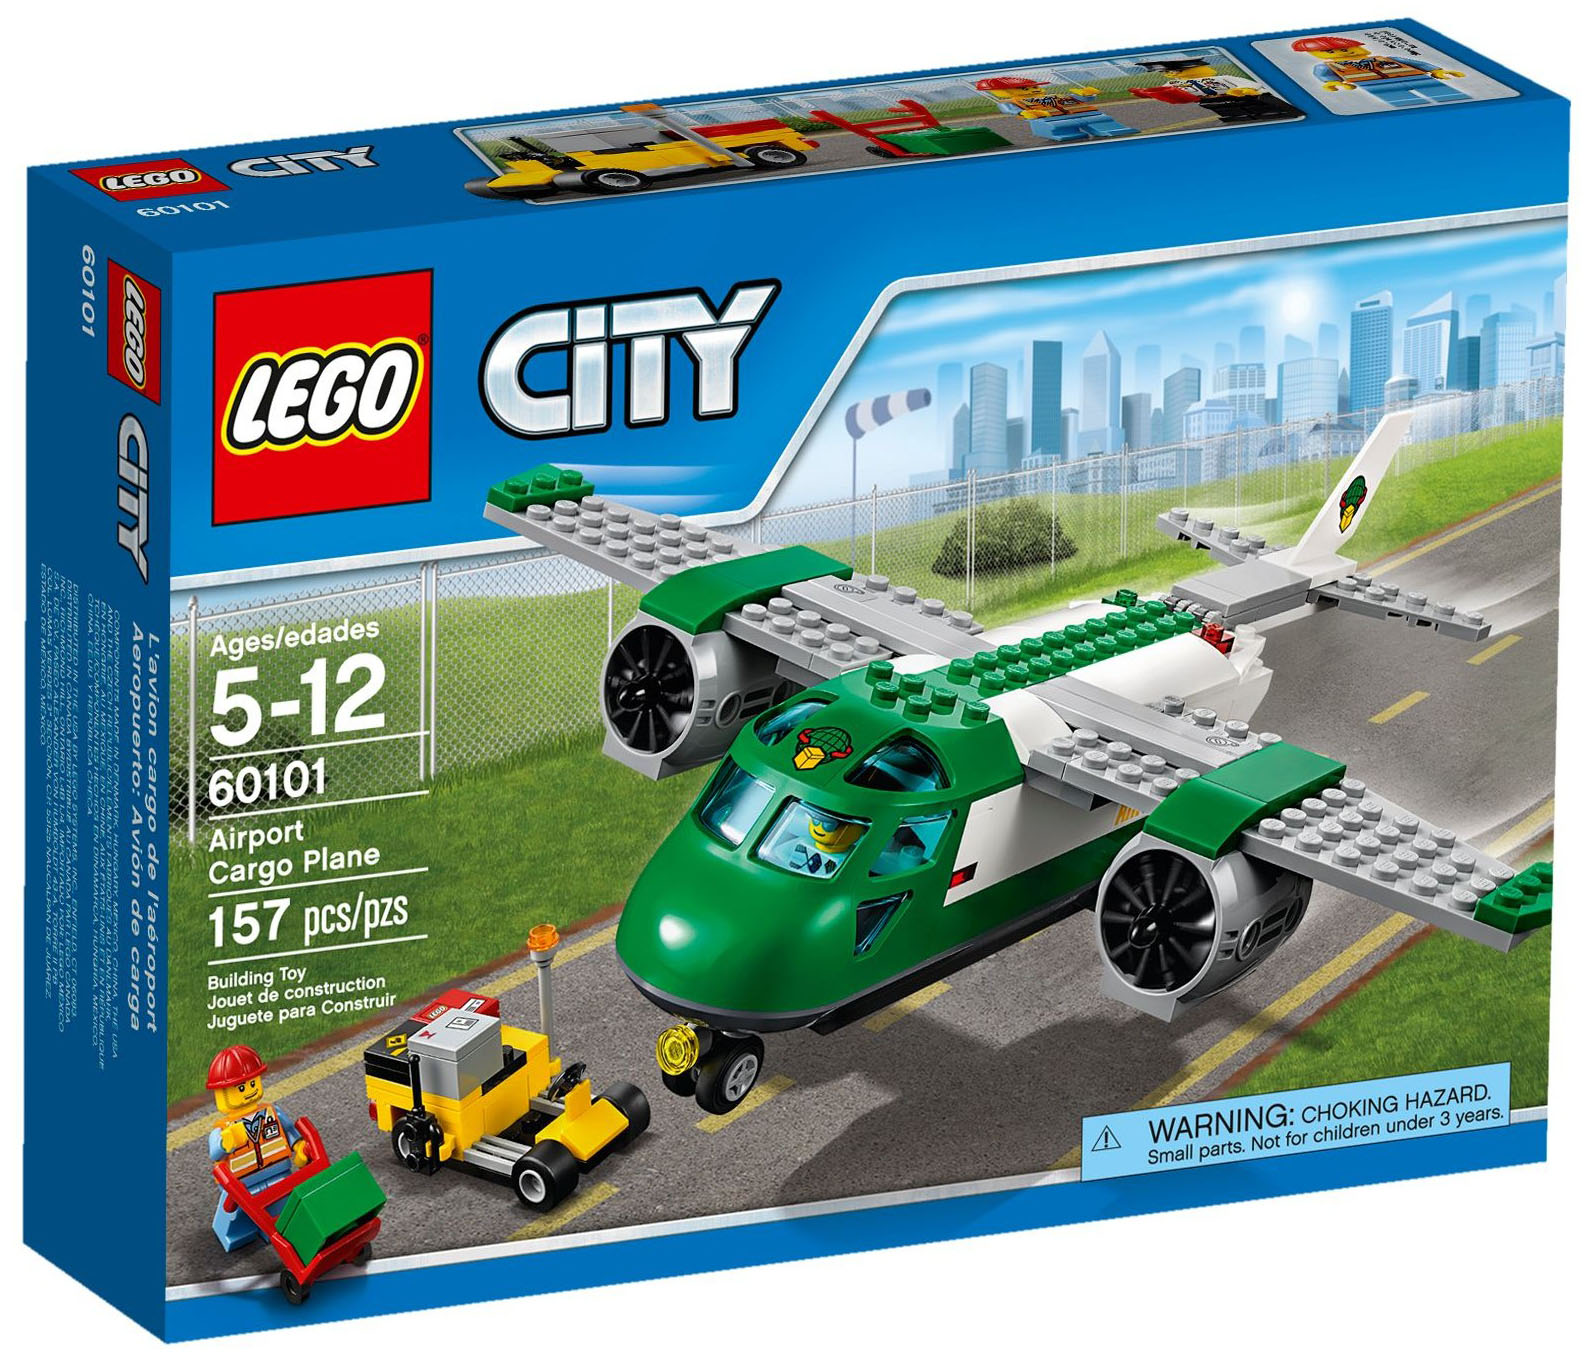 LEGO City 60101 pas cher, L'avion cargo